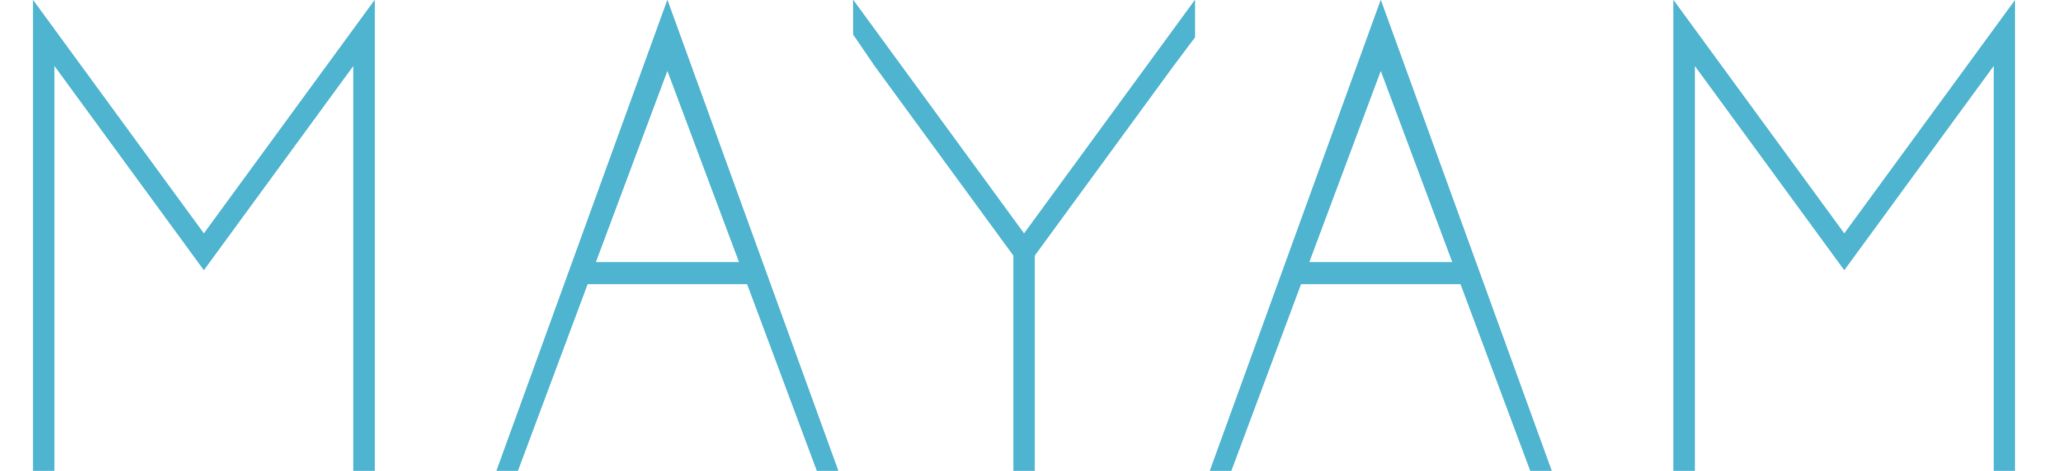 Mayam logo